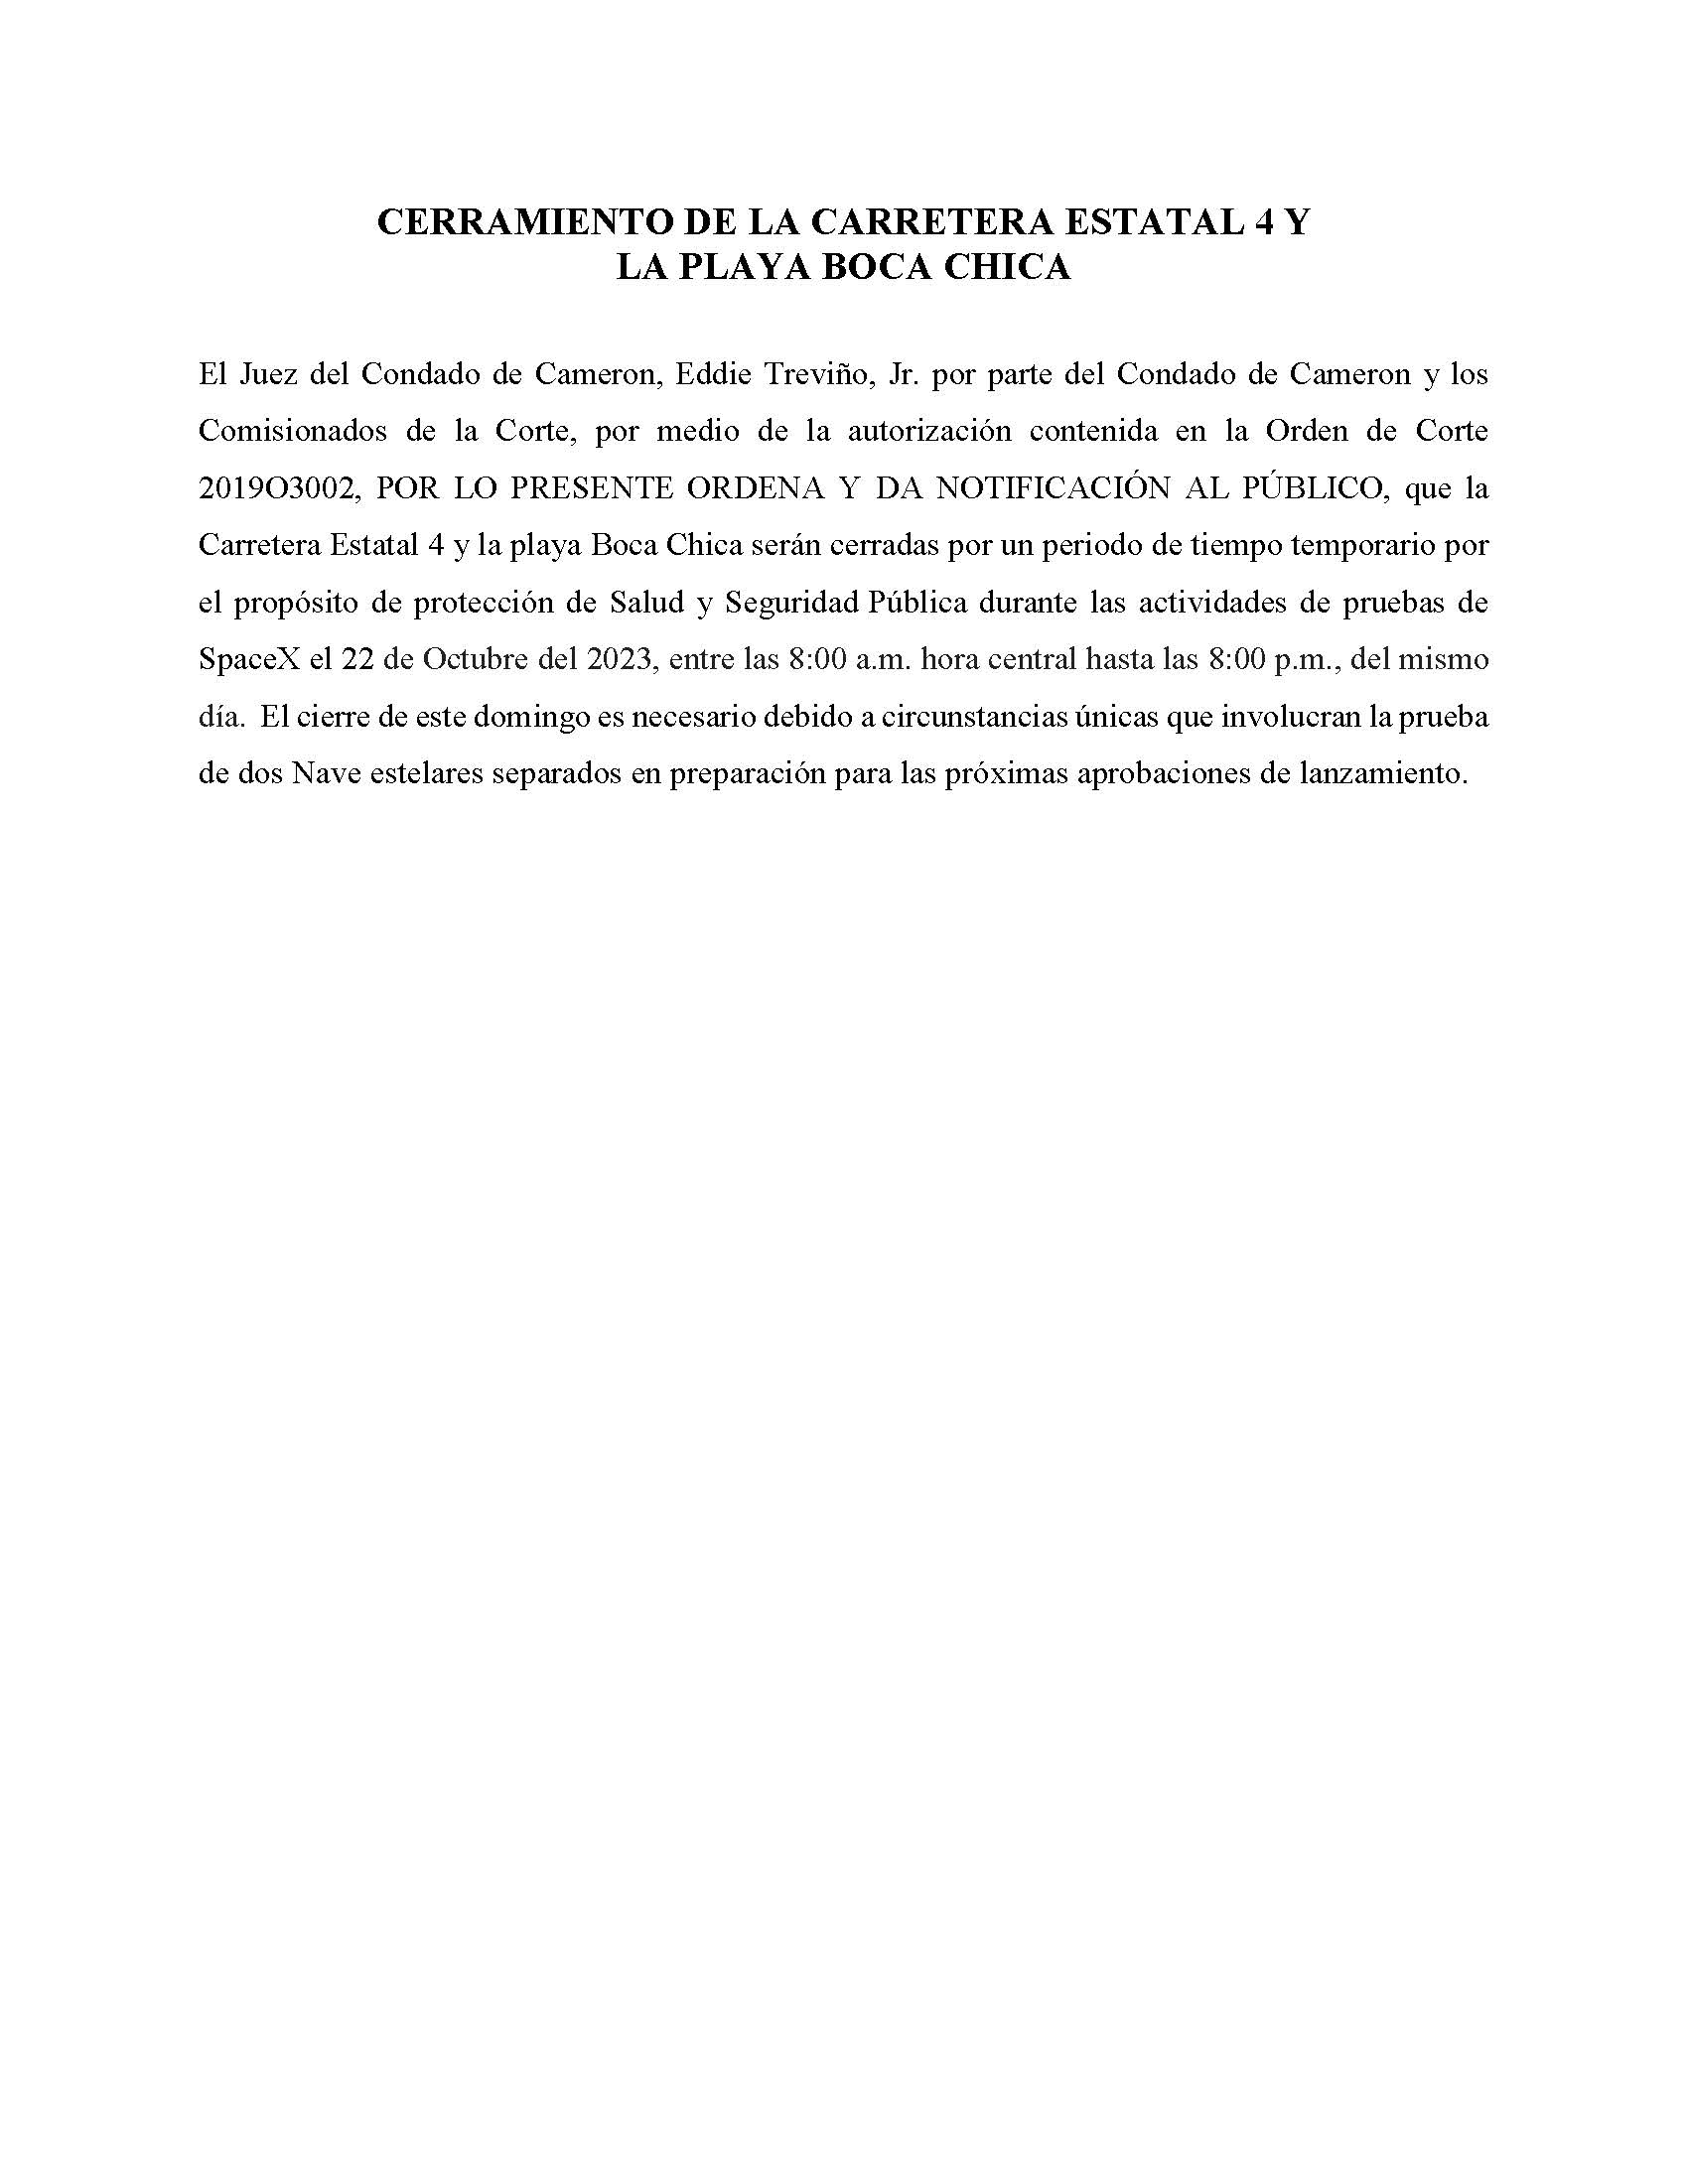 ORDER.CLOSURE OF HIGHWAY 4 Y LA PLAYA BOCA CHICA.SPANISH.10.22.23